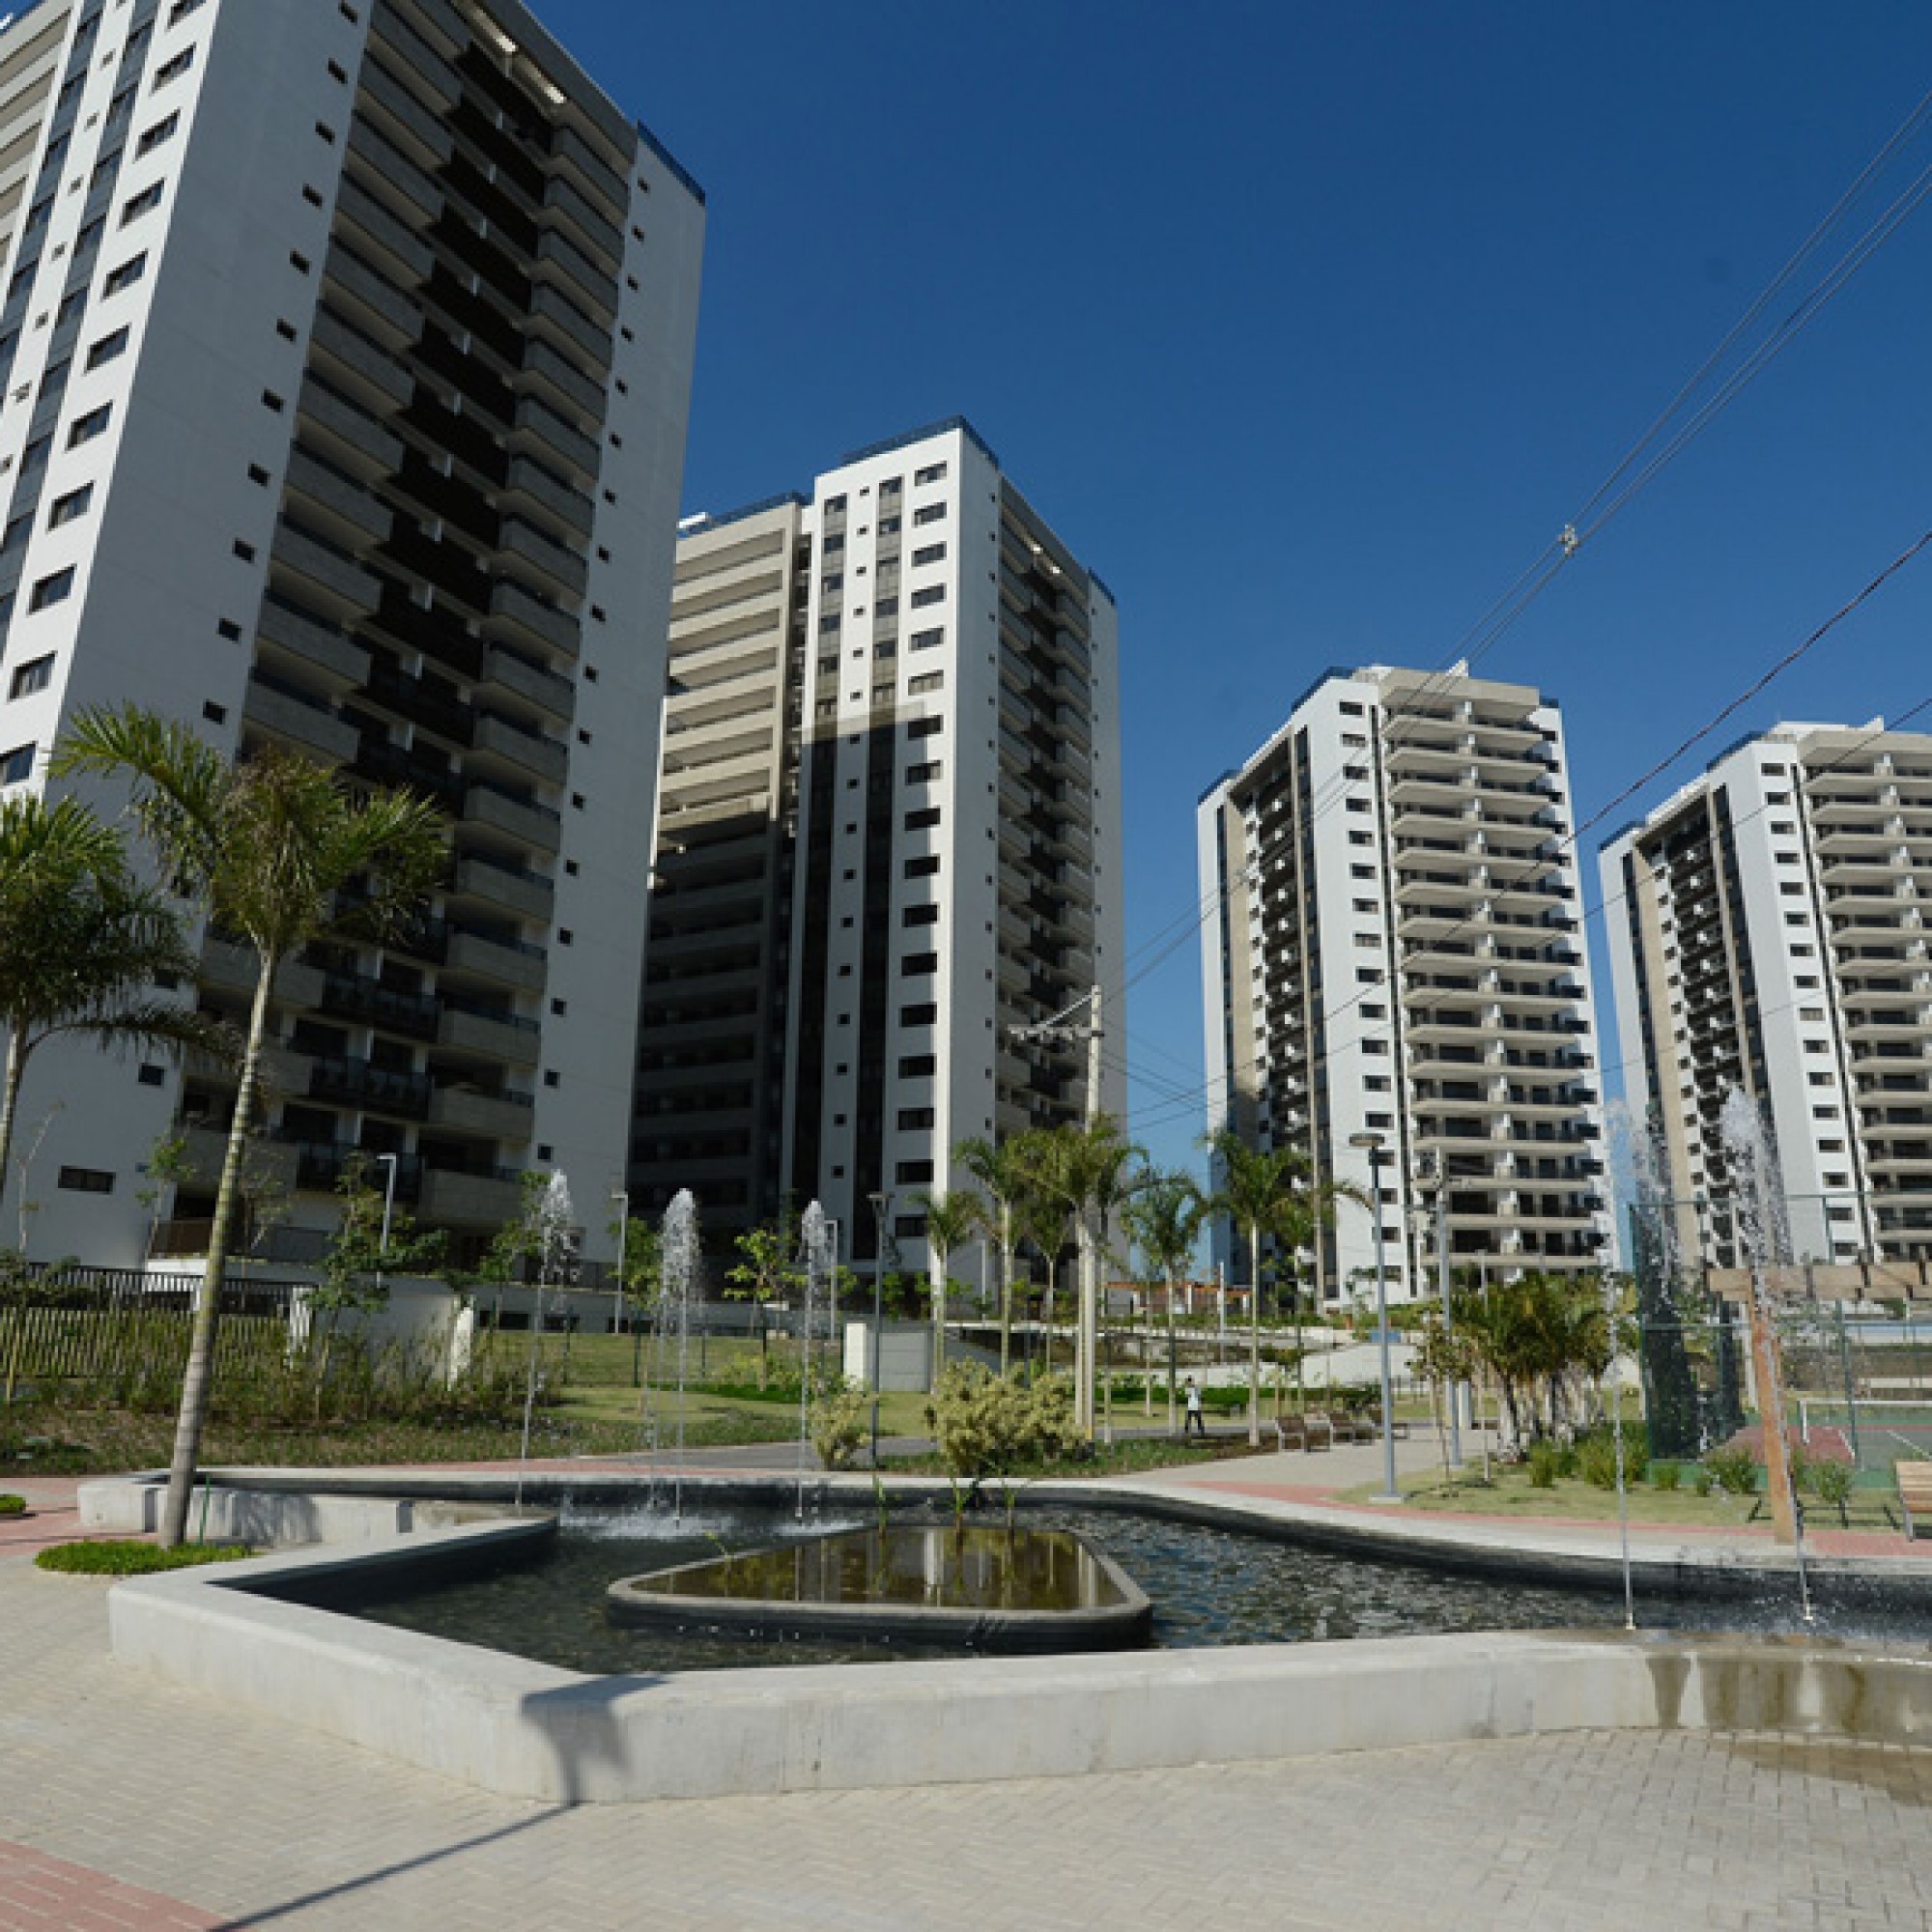 Das olympische Dorf in Rio de Janeiro im Juni 2016 (Tomaz Silva/Agência Brasil, CC BY 3.0 br, commons.wikimedia.org